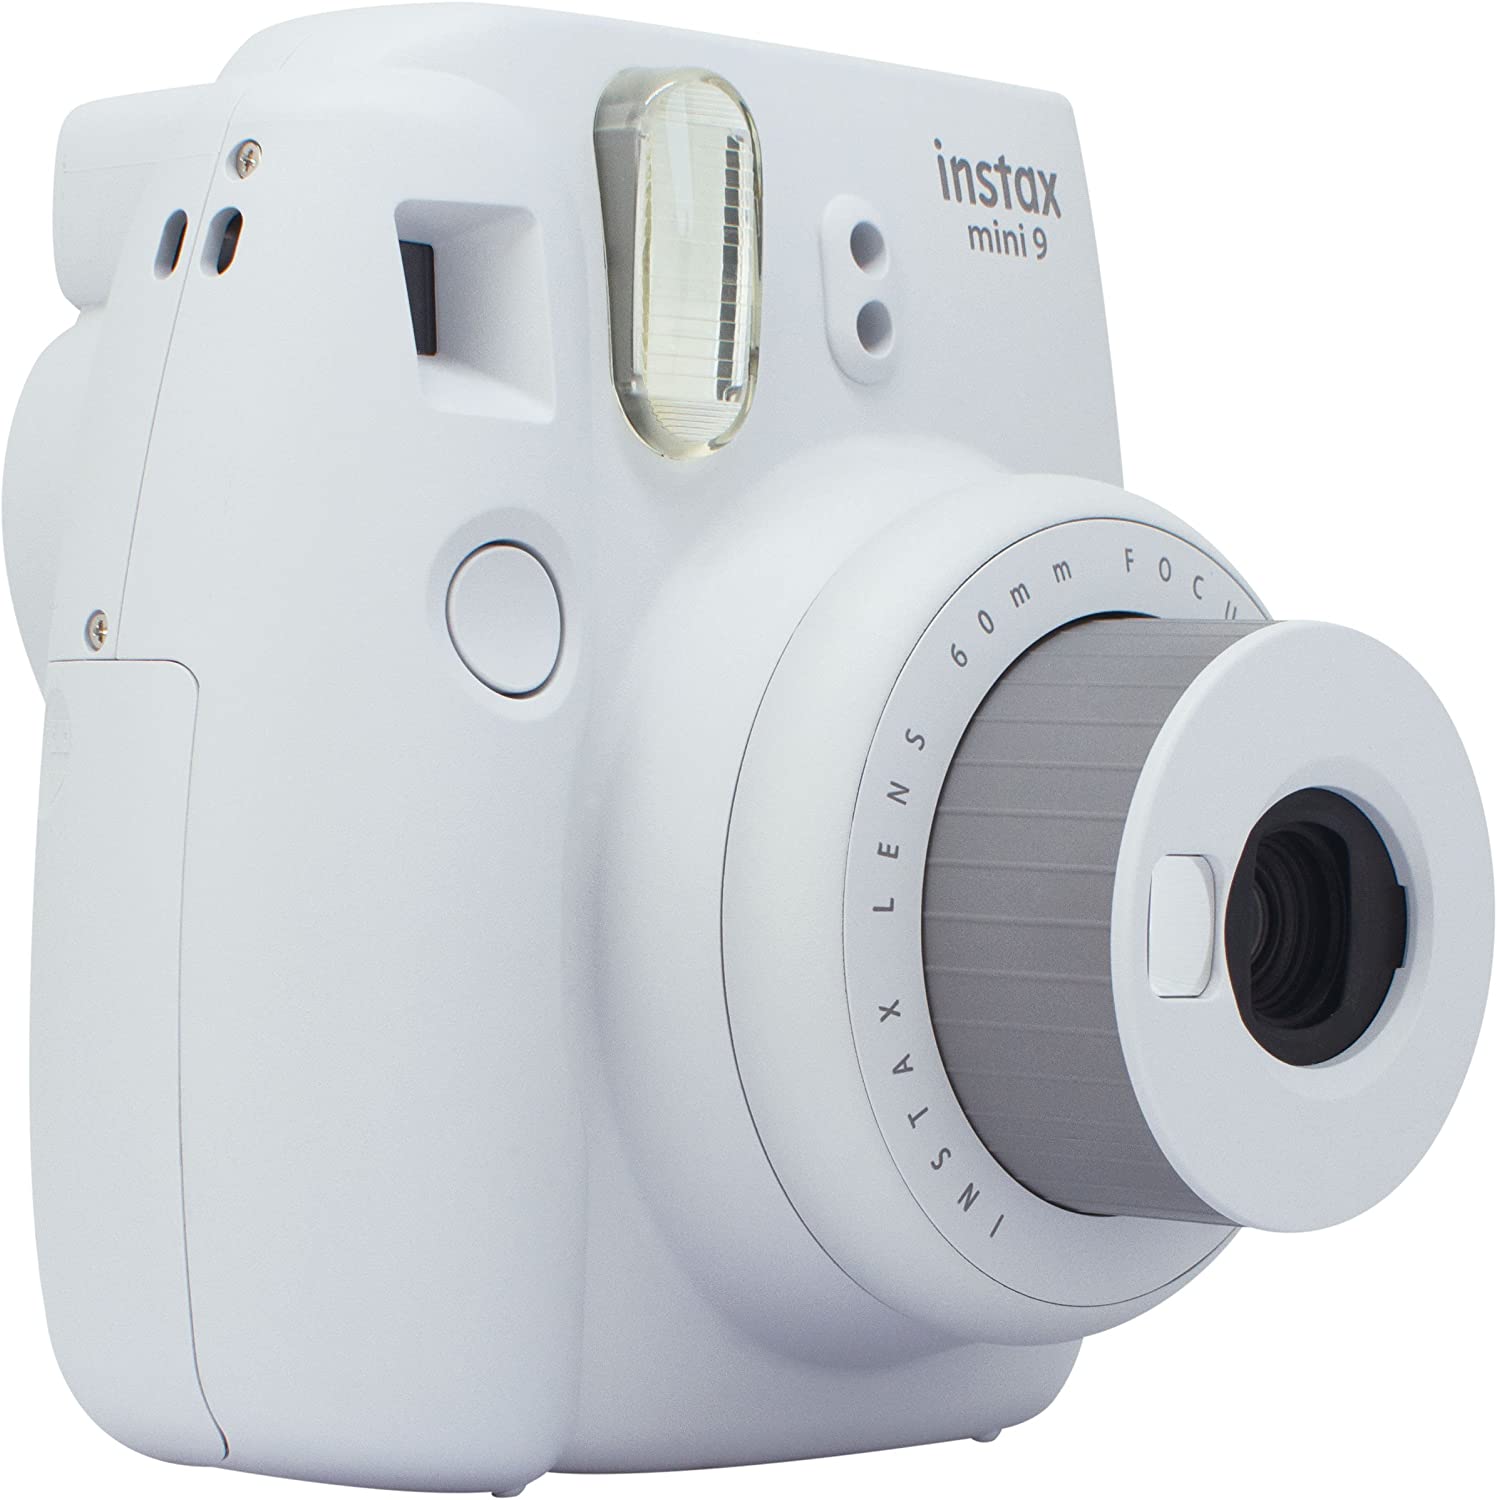 Fuji film Instax Mini 9 Instant Camera in Smokey White (UK Stock